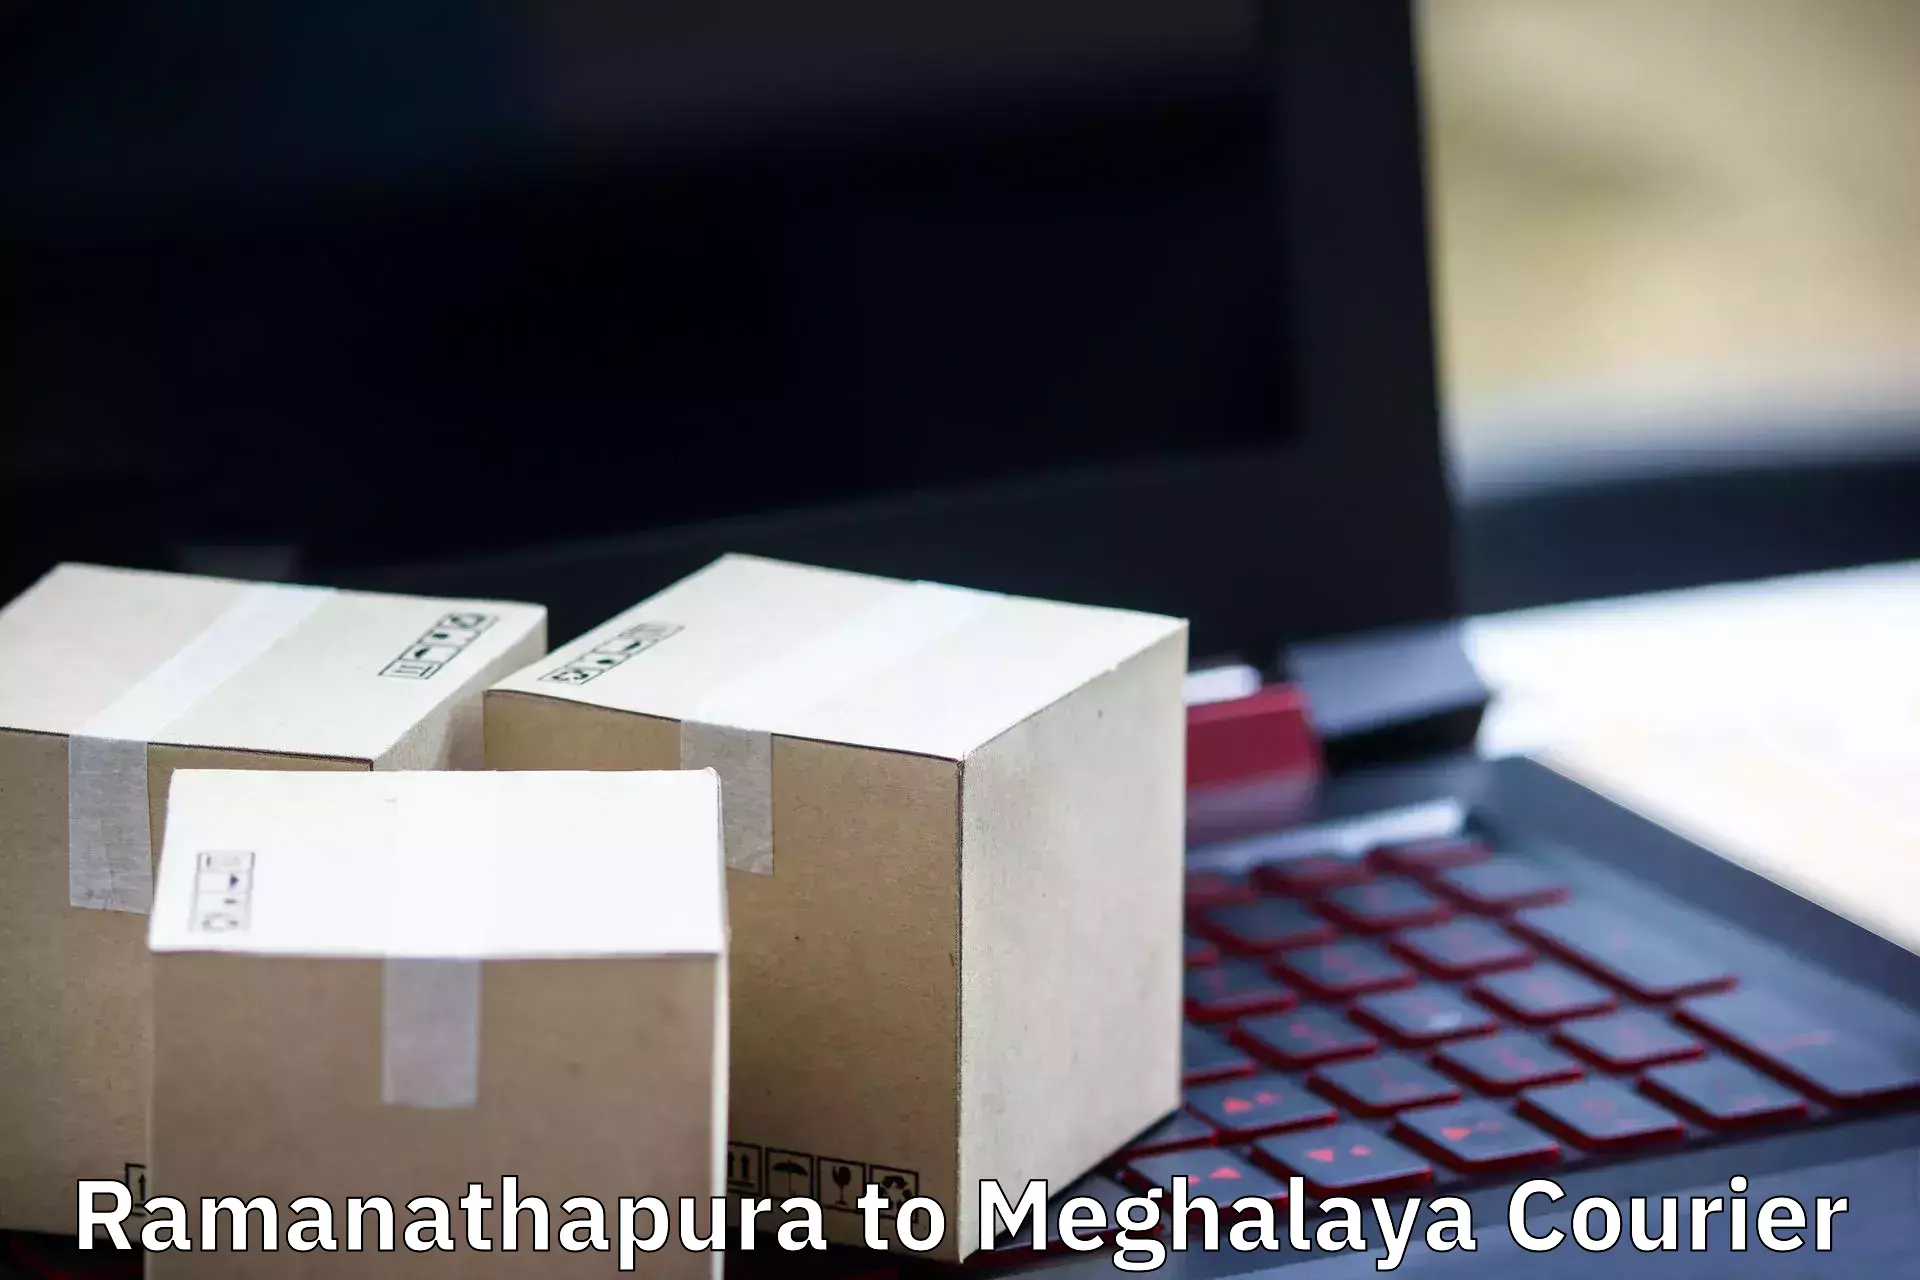 Professional moving company Ramanathapura to Tura